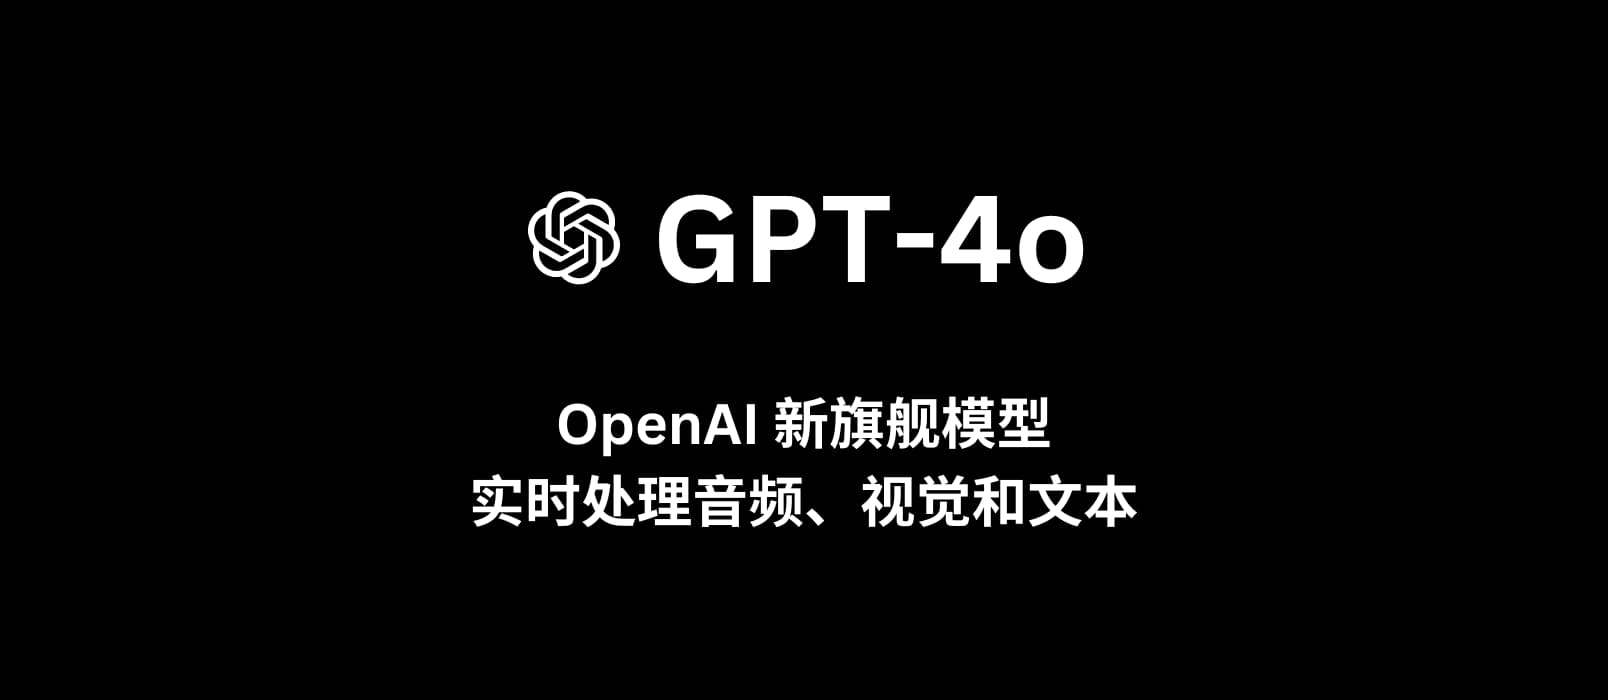 OpenAI 发布新旗舰模型 GPT-4o，实时处理音频、视觉和文本